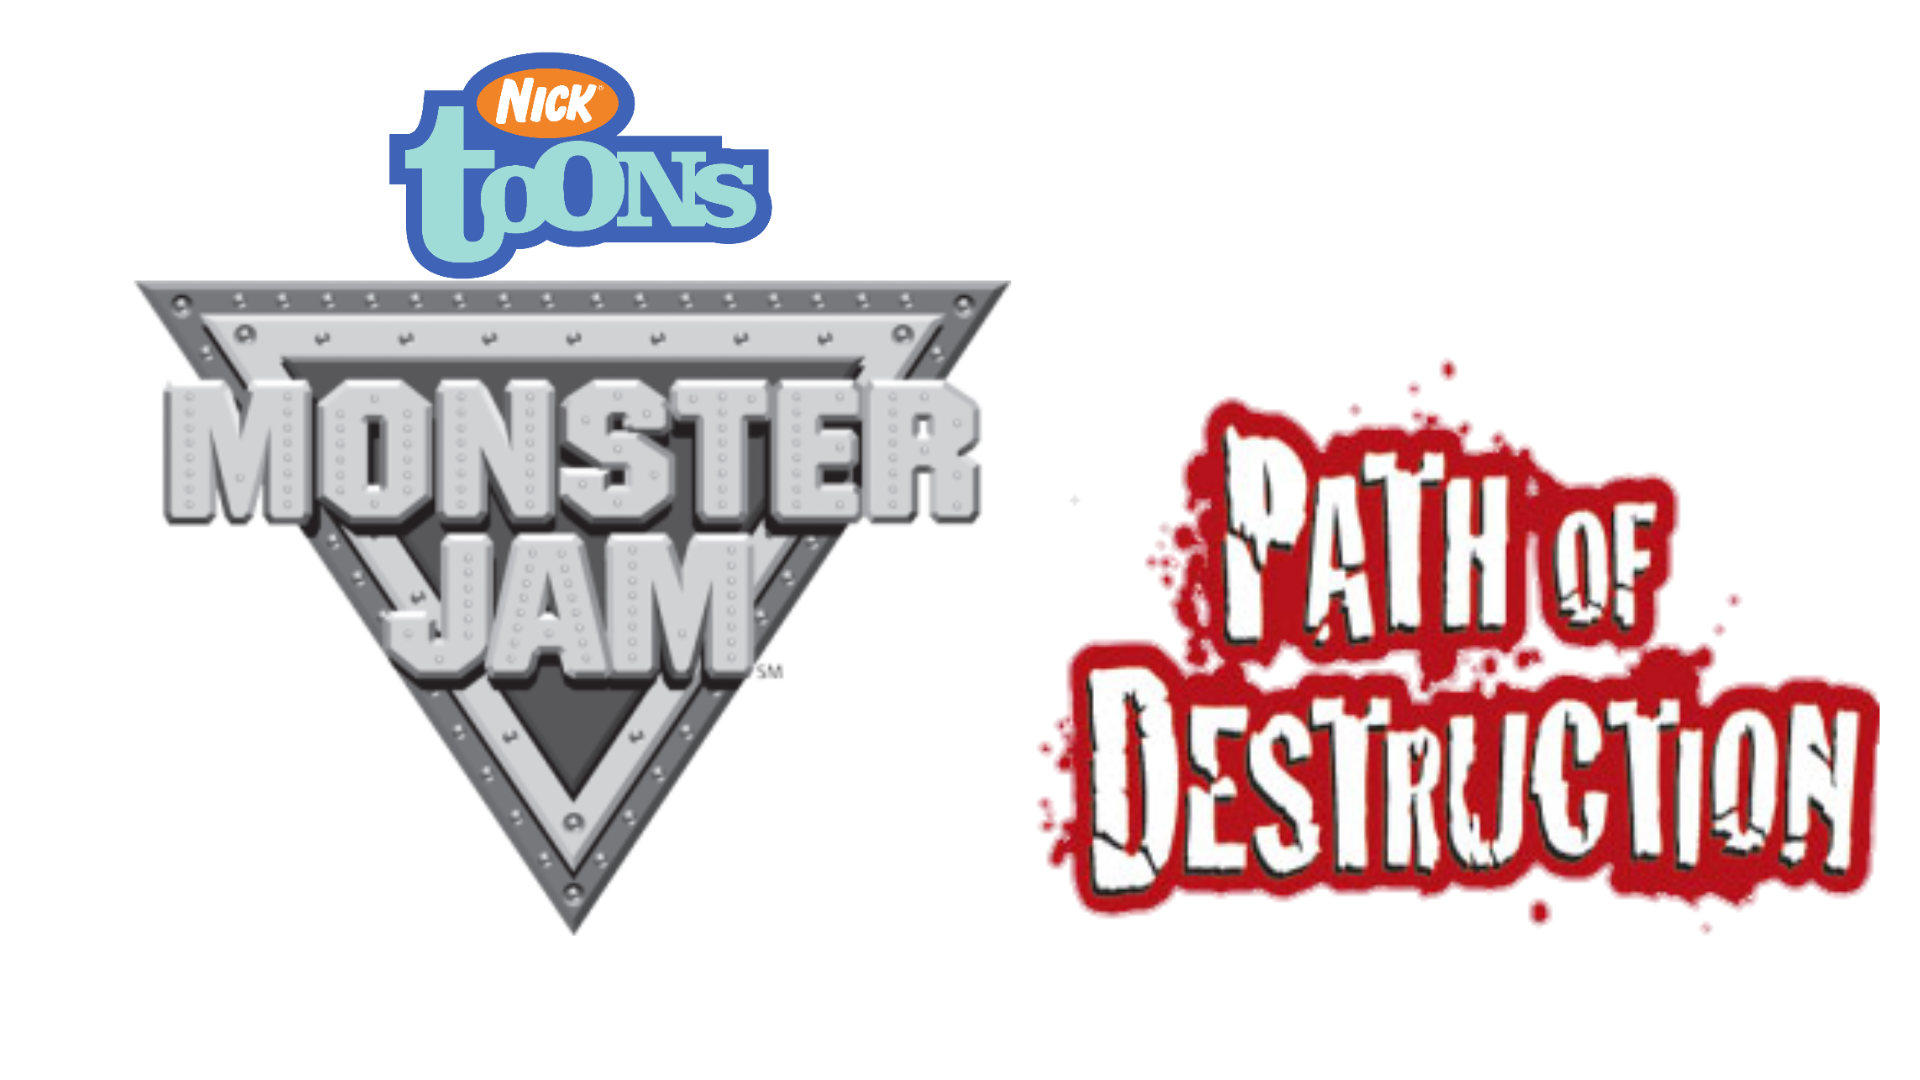 nicktoons monster jam path of destruction logo by jlopez2003 on DeviantArt